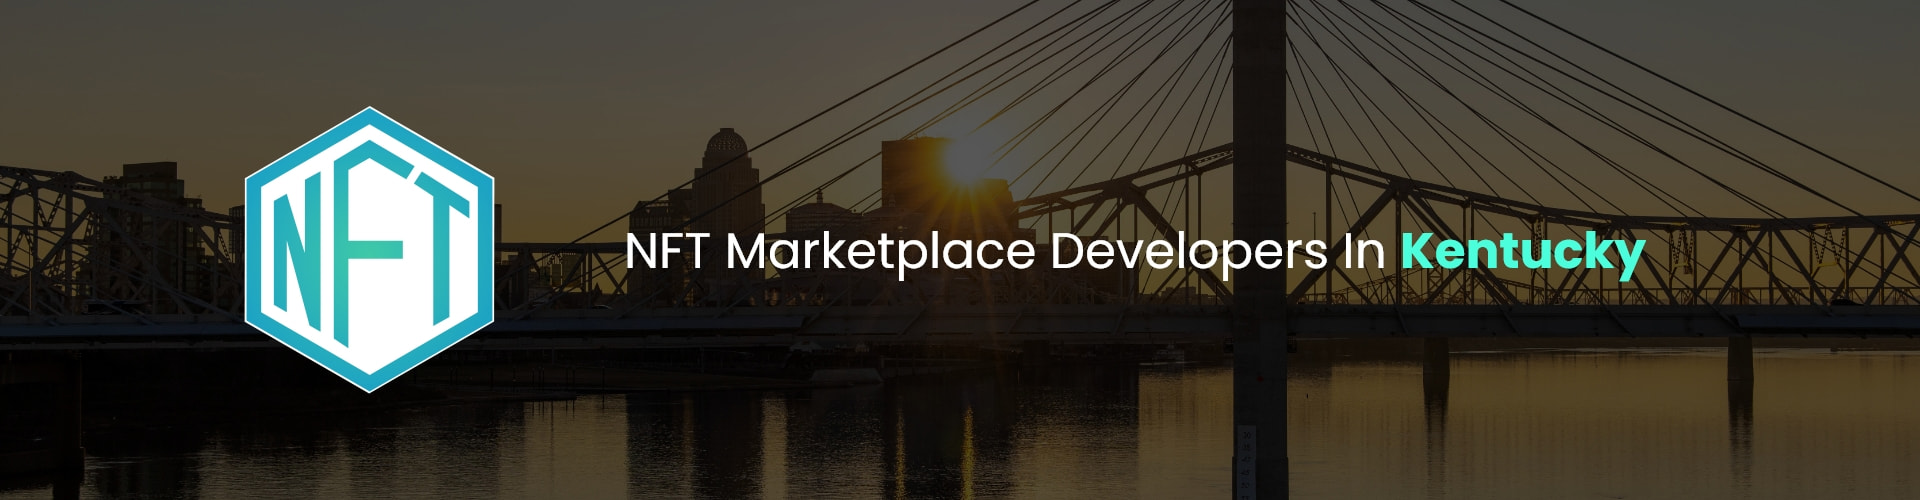 hire nft marketplace developers in kentucky